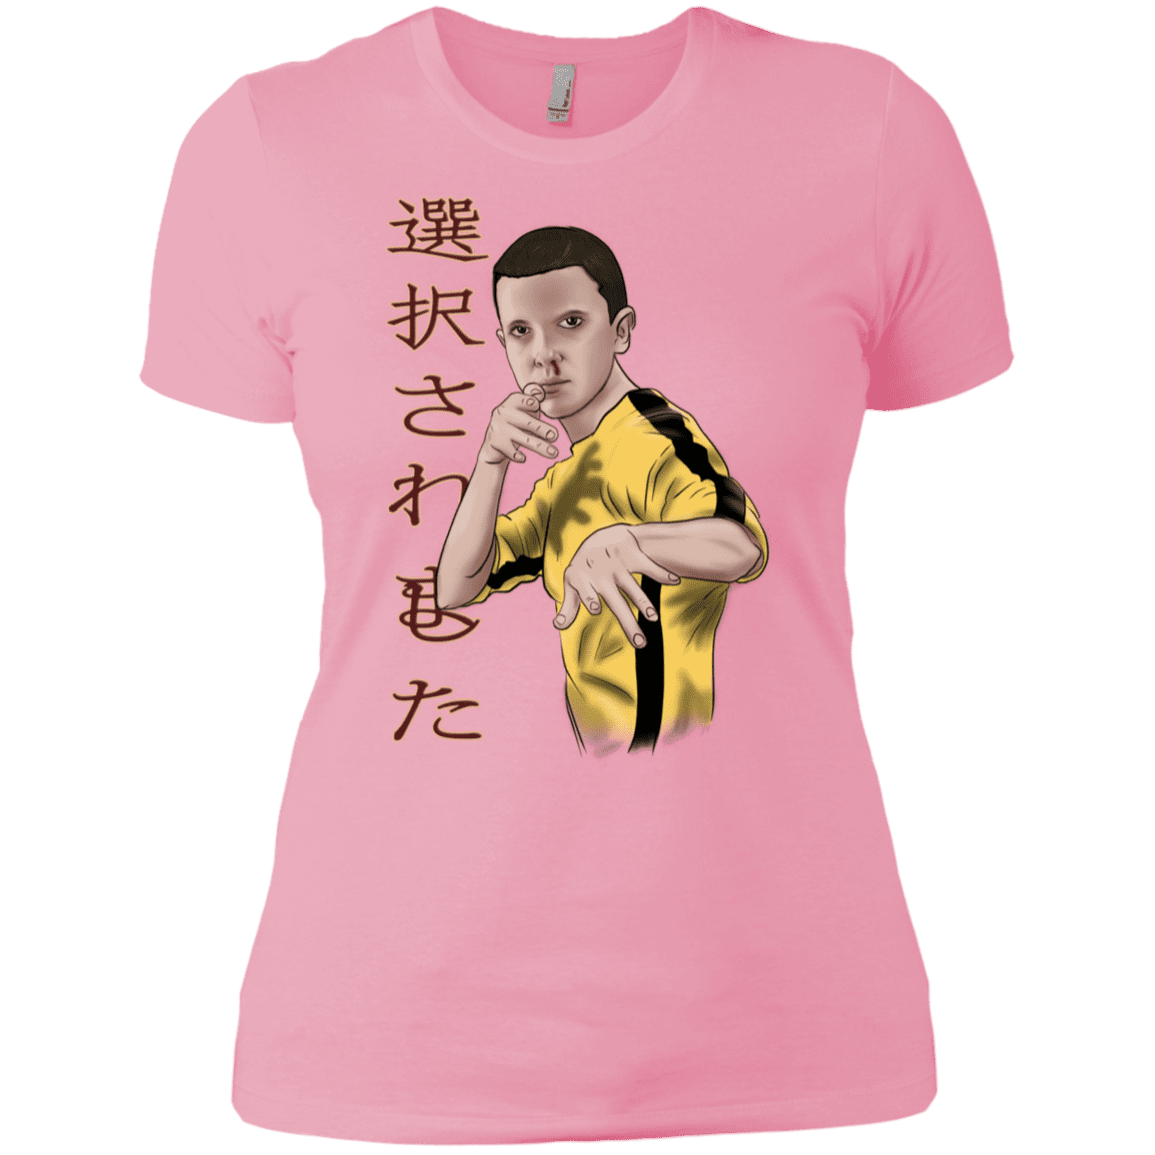 T-Shirts Light Pink / X-Small ELEEven Women's Premium T-Shirt